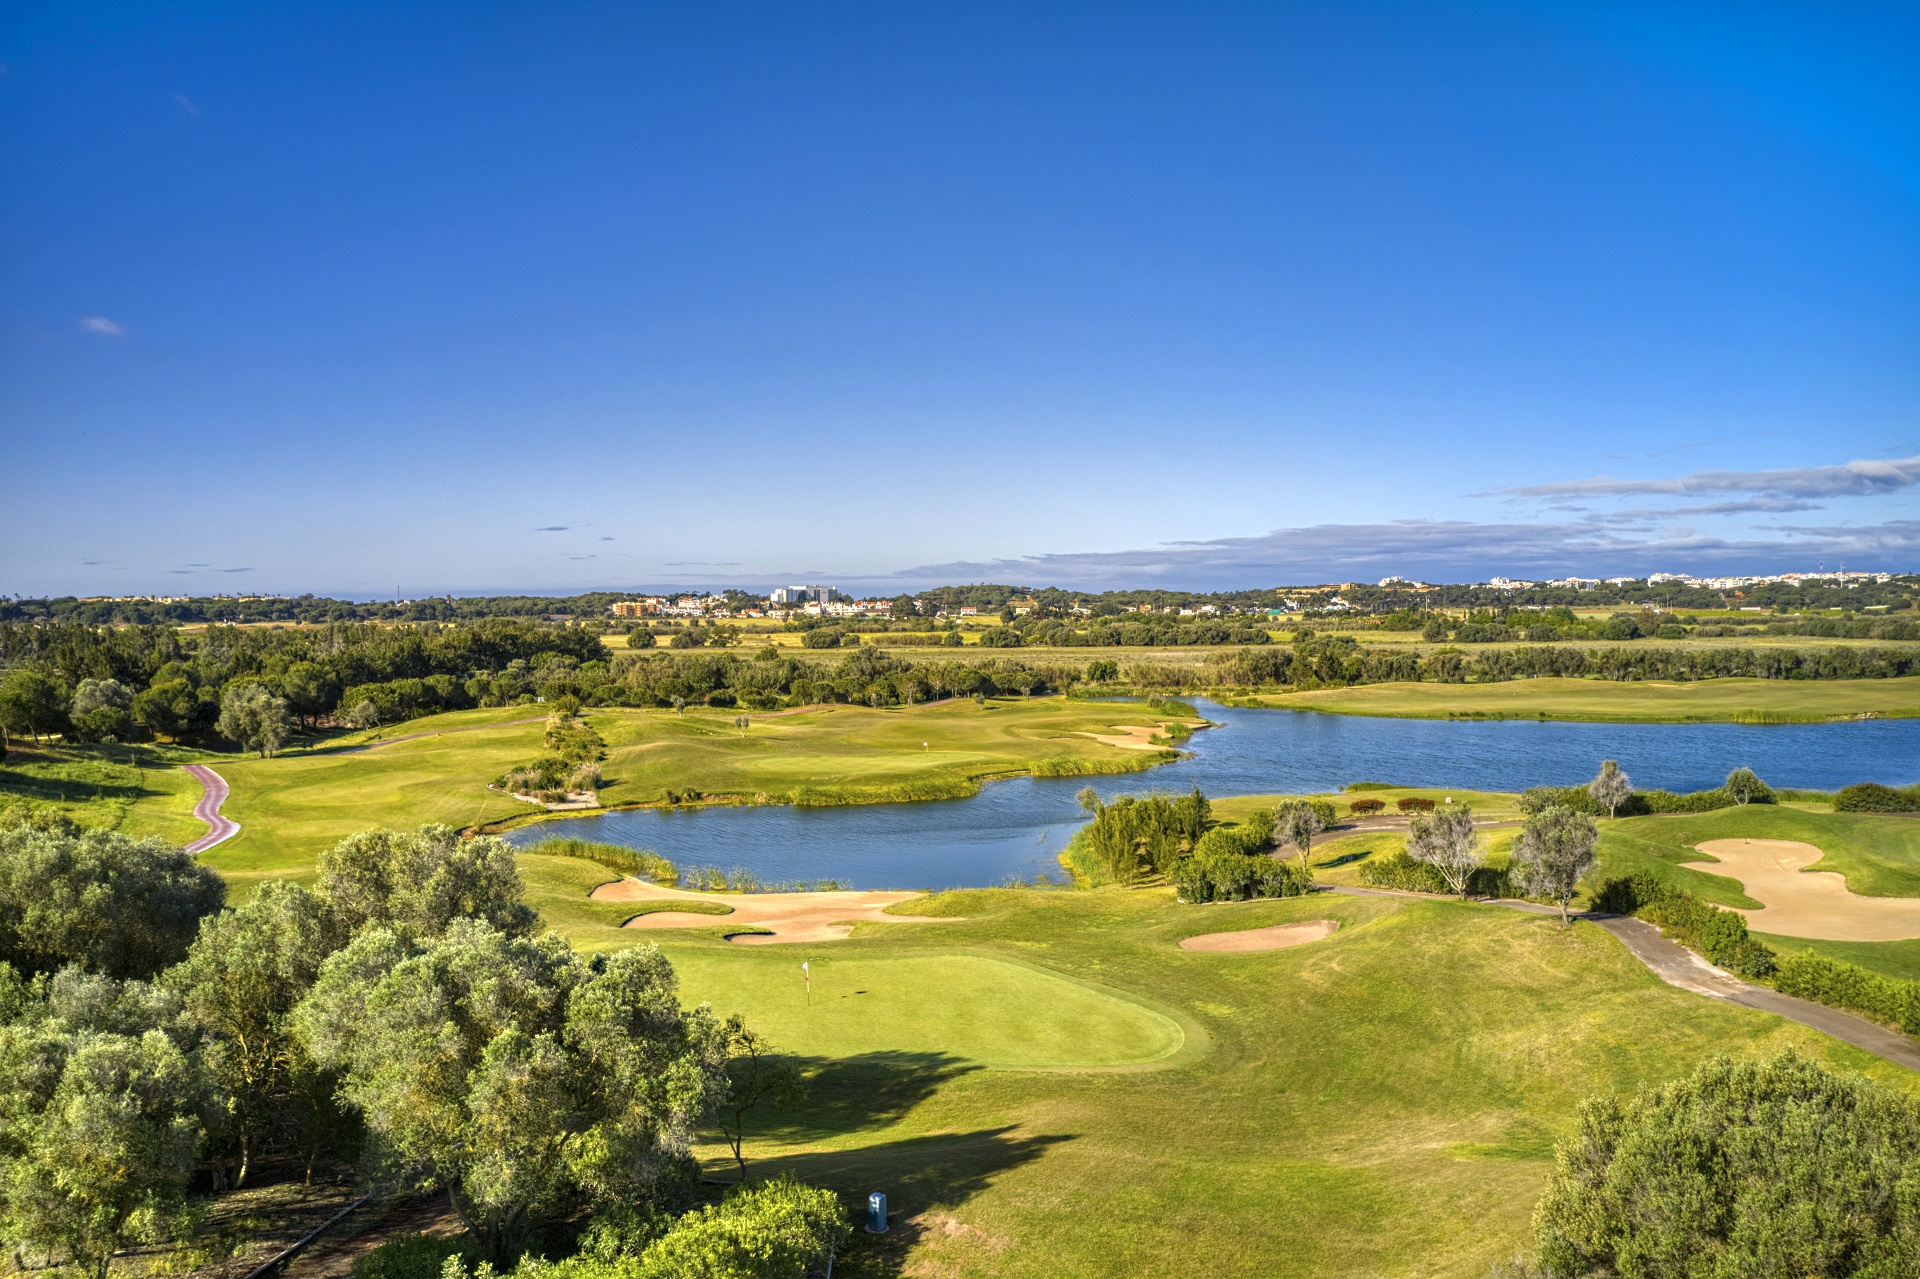 Dom Pedro Victoria Golf Course | Golf i Vilamoura, Algarve